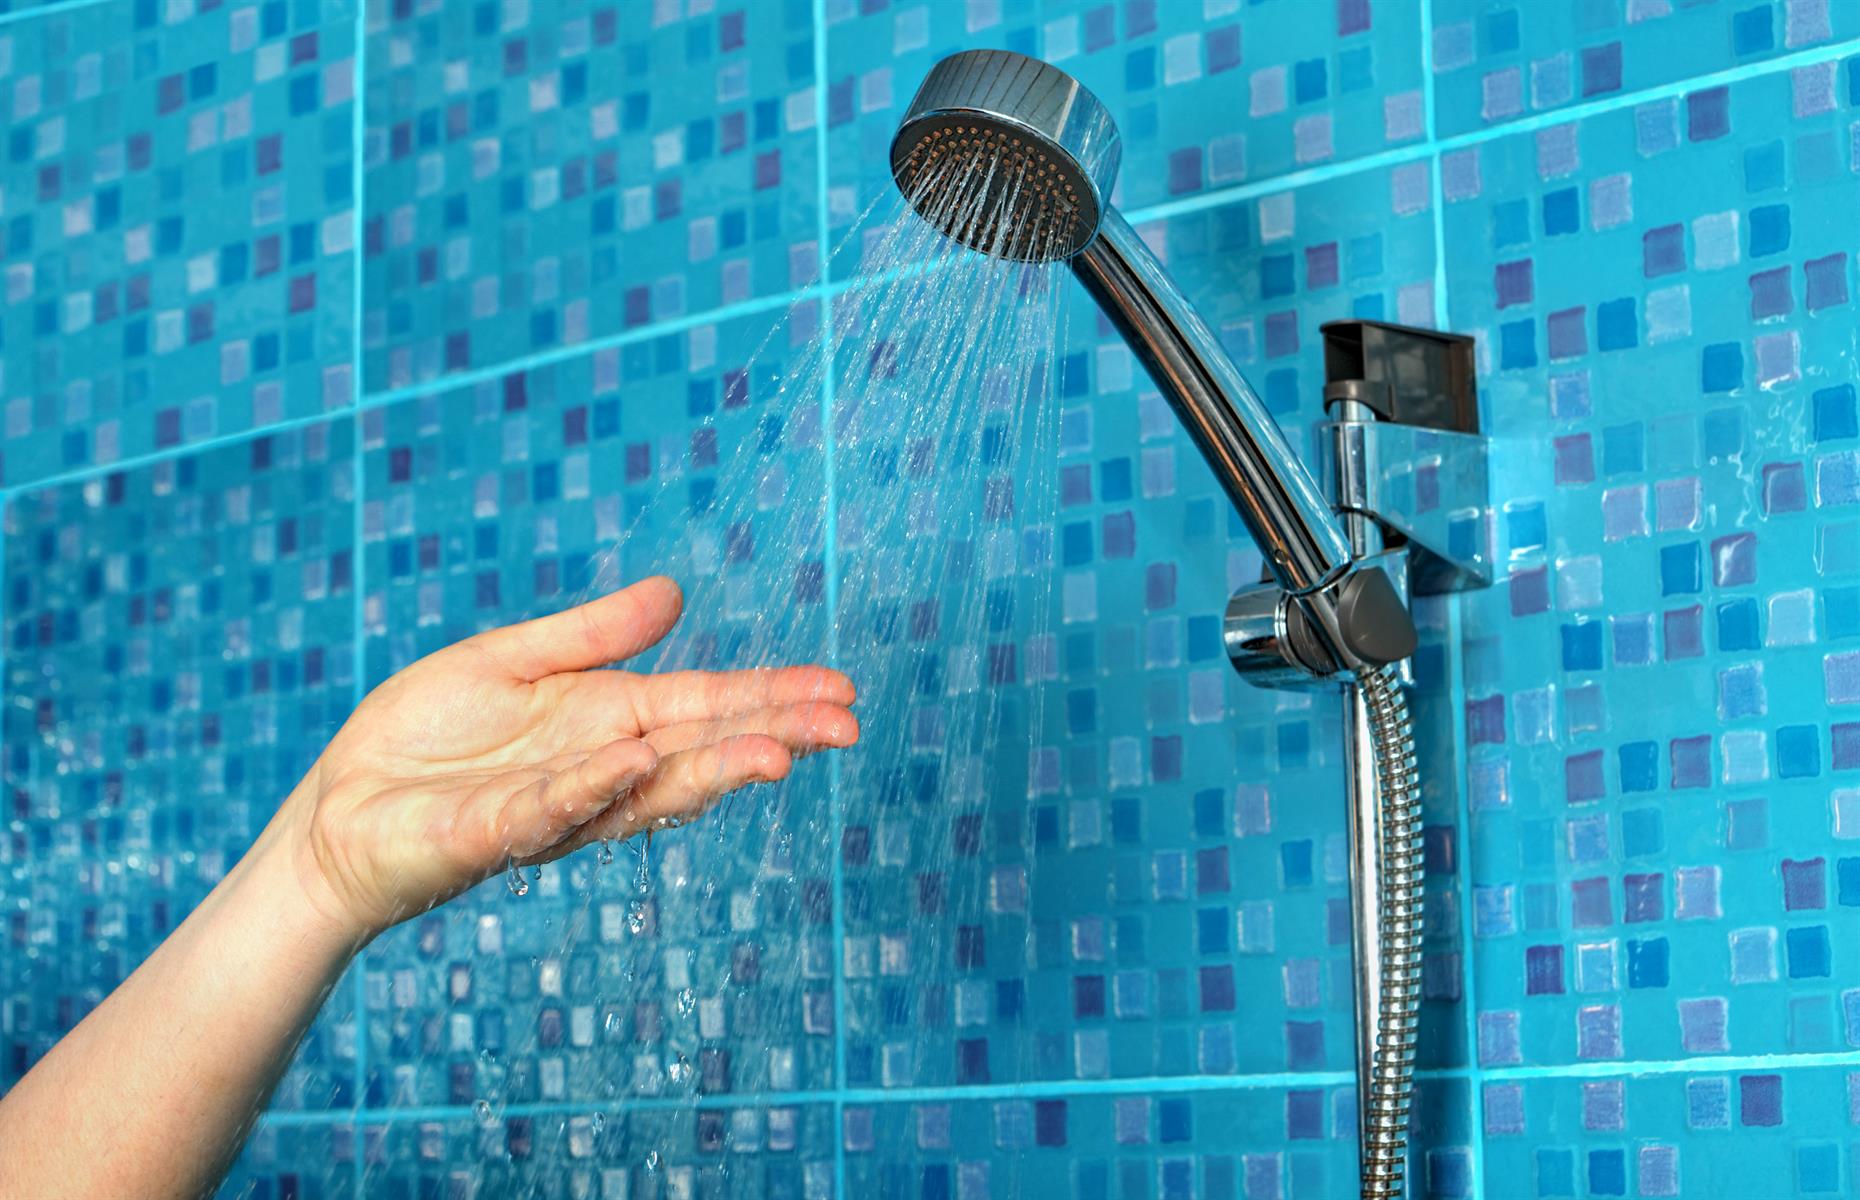 Posh shower gel really is money down the drain (image: Shutterstock)